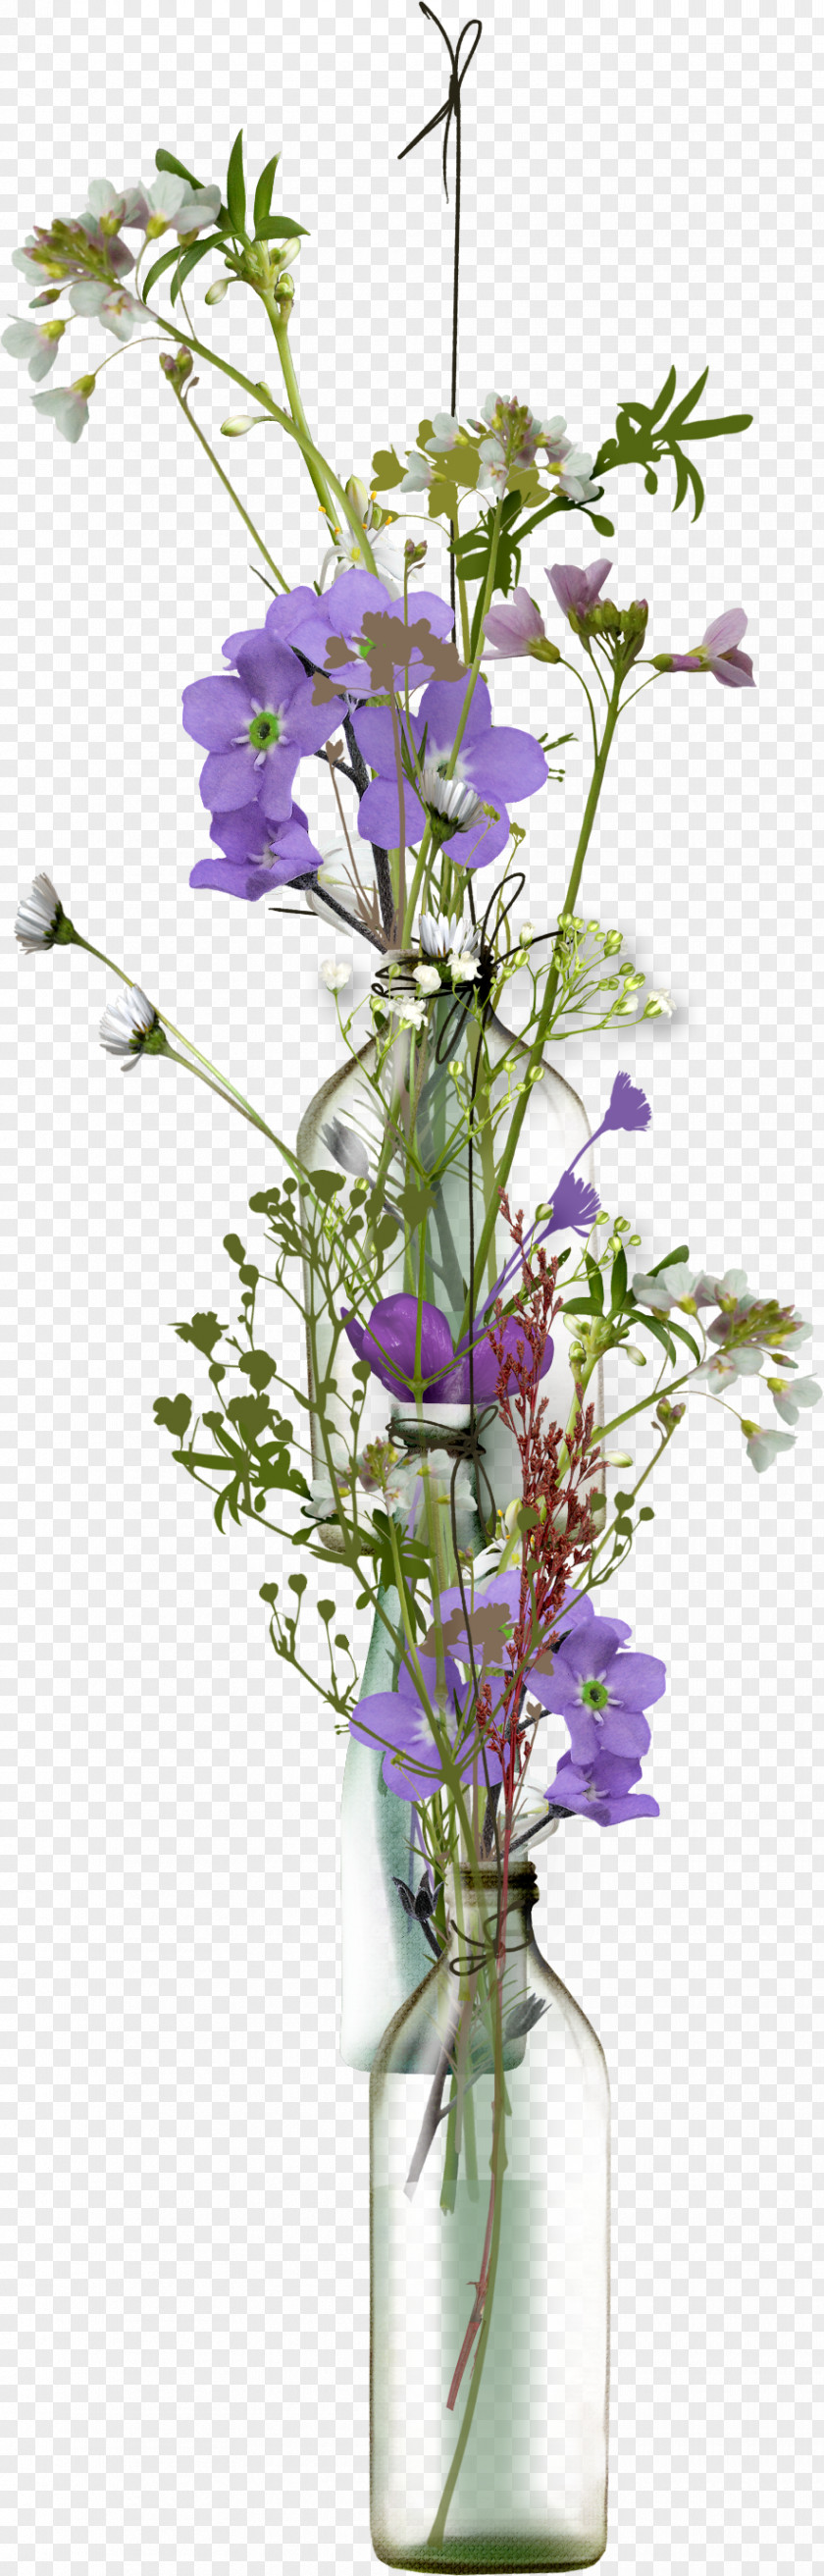 Transparent Vase Of Flowers Flower Glass PNG